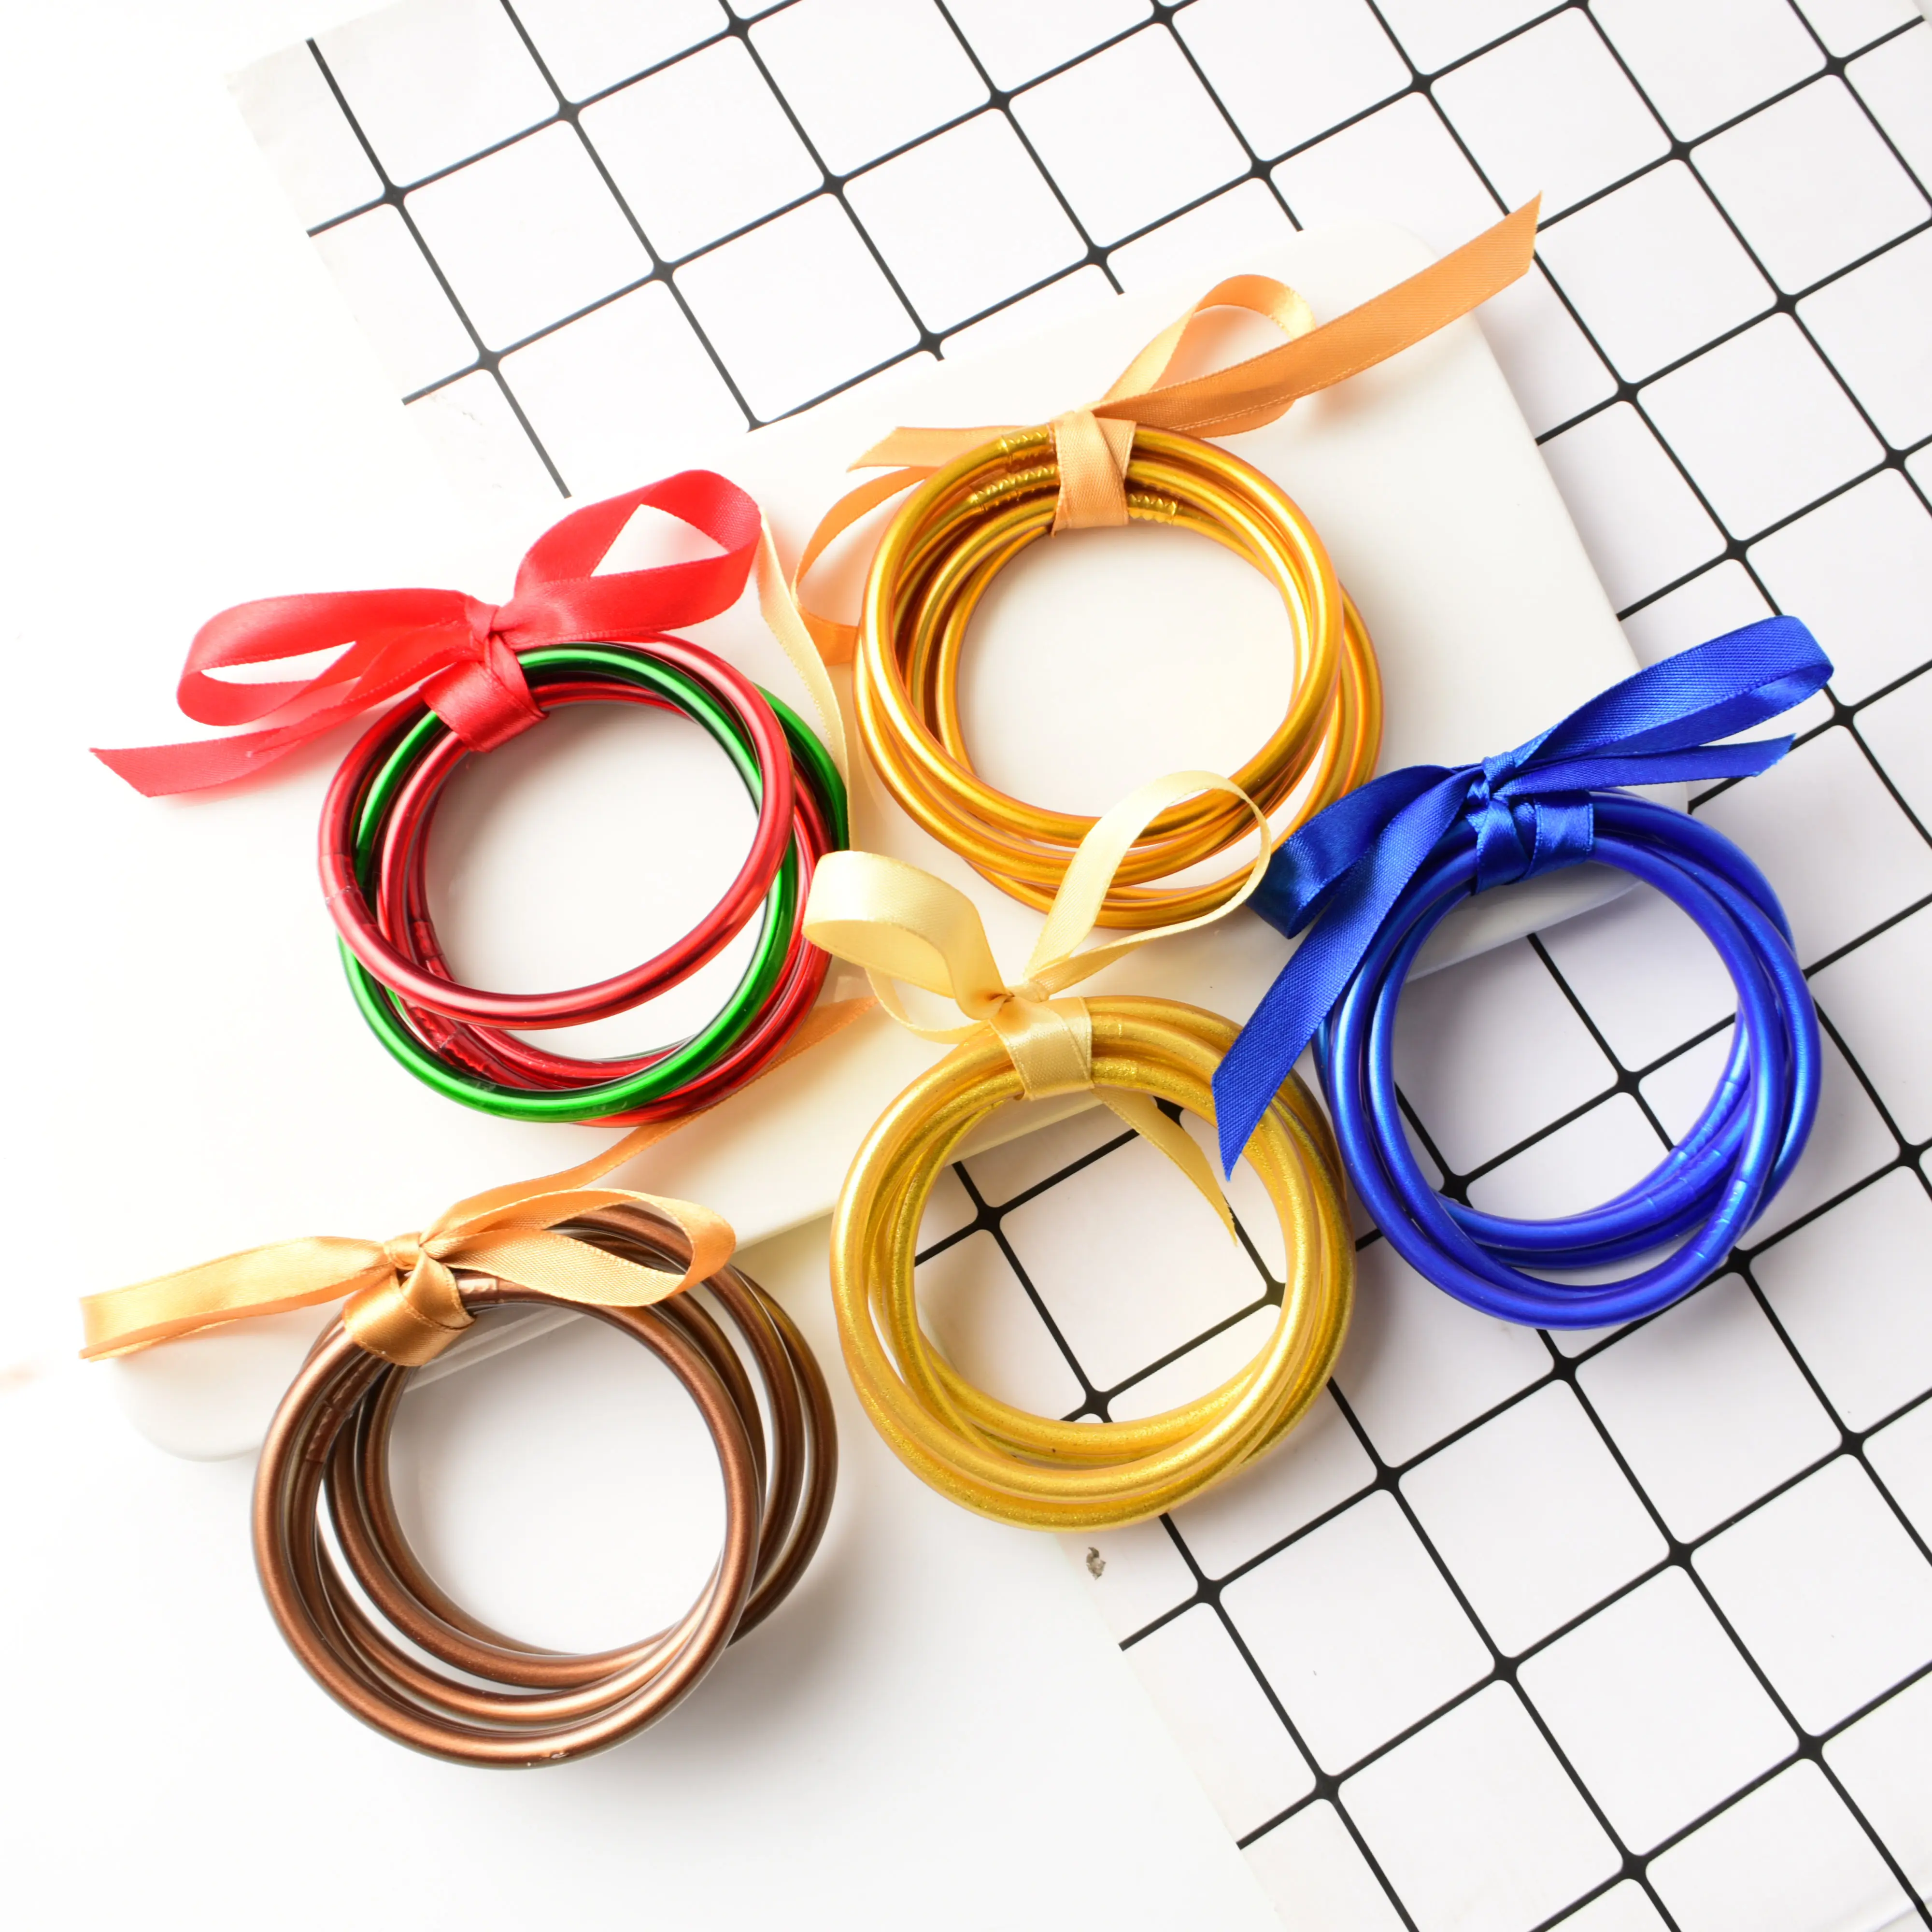 Bowknot גליטר מלא ג 'לי סיליקון צמיד 45 mm חמוד אופנה צמידי מתנות עבור בנות